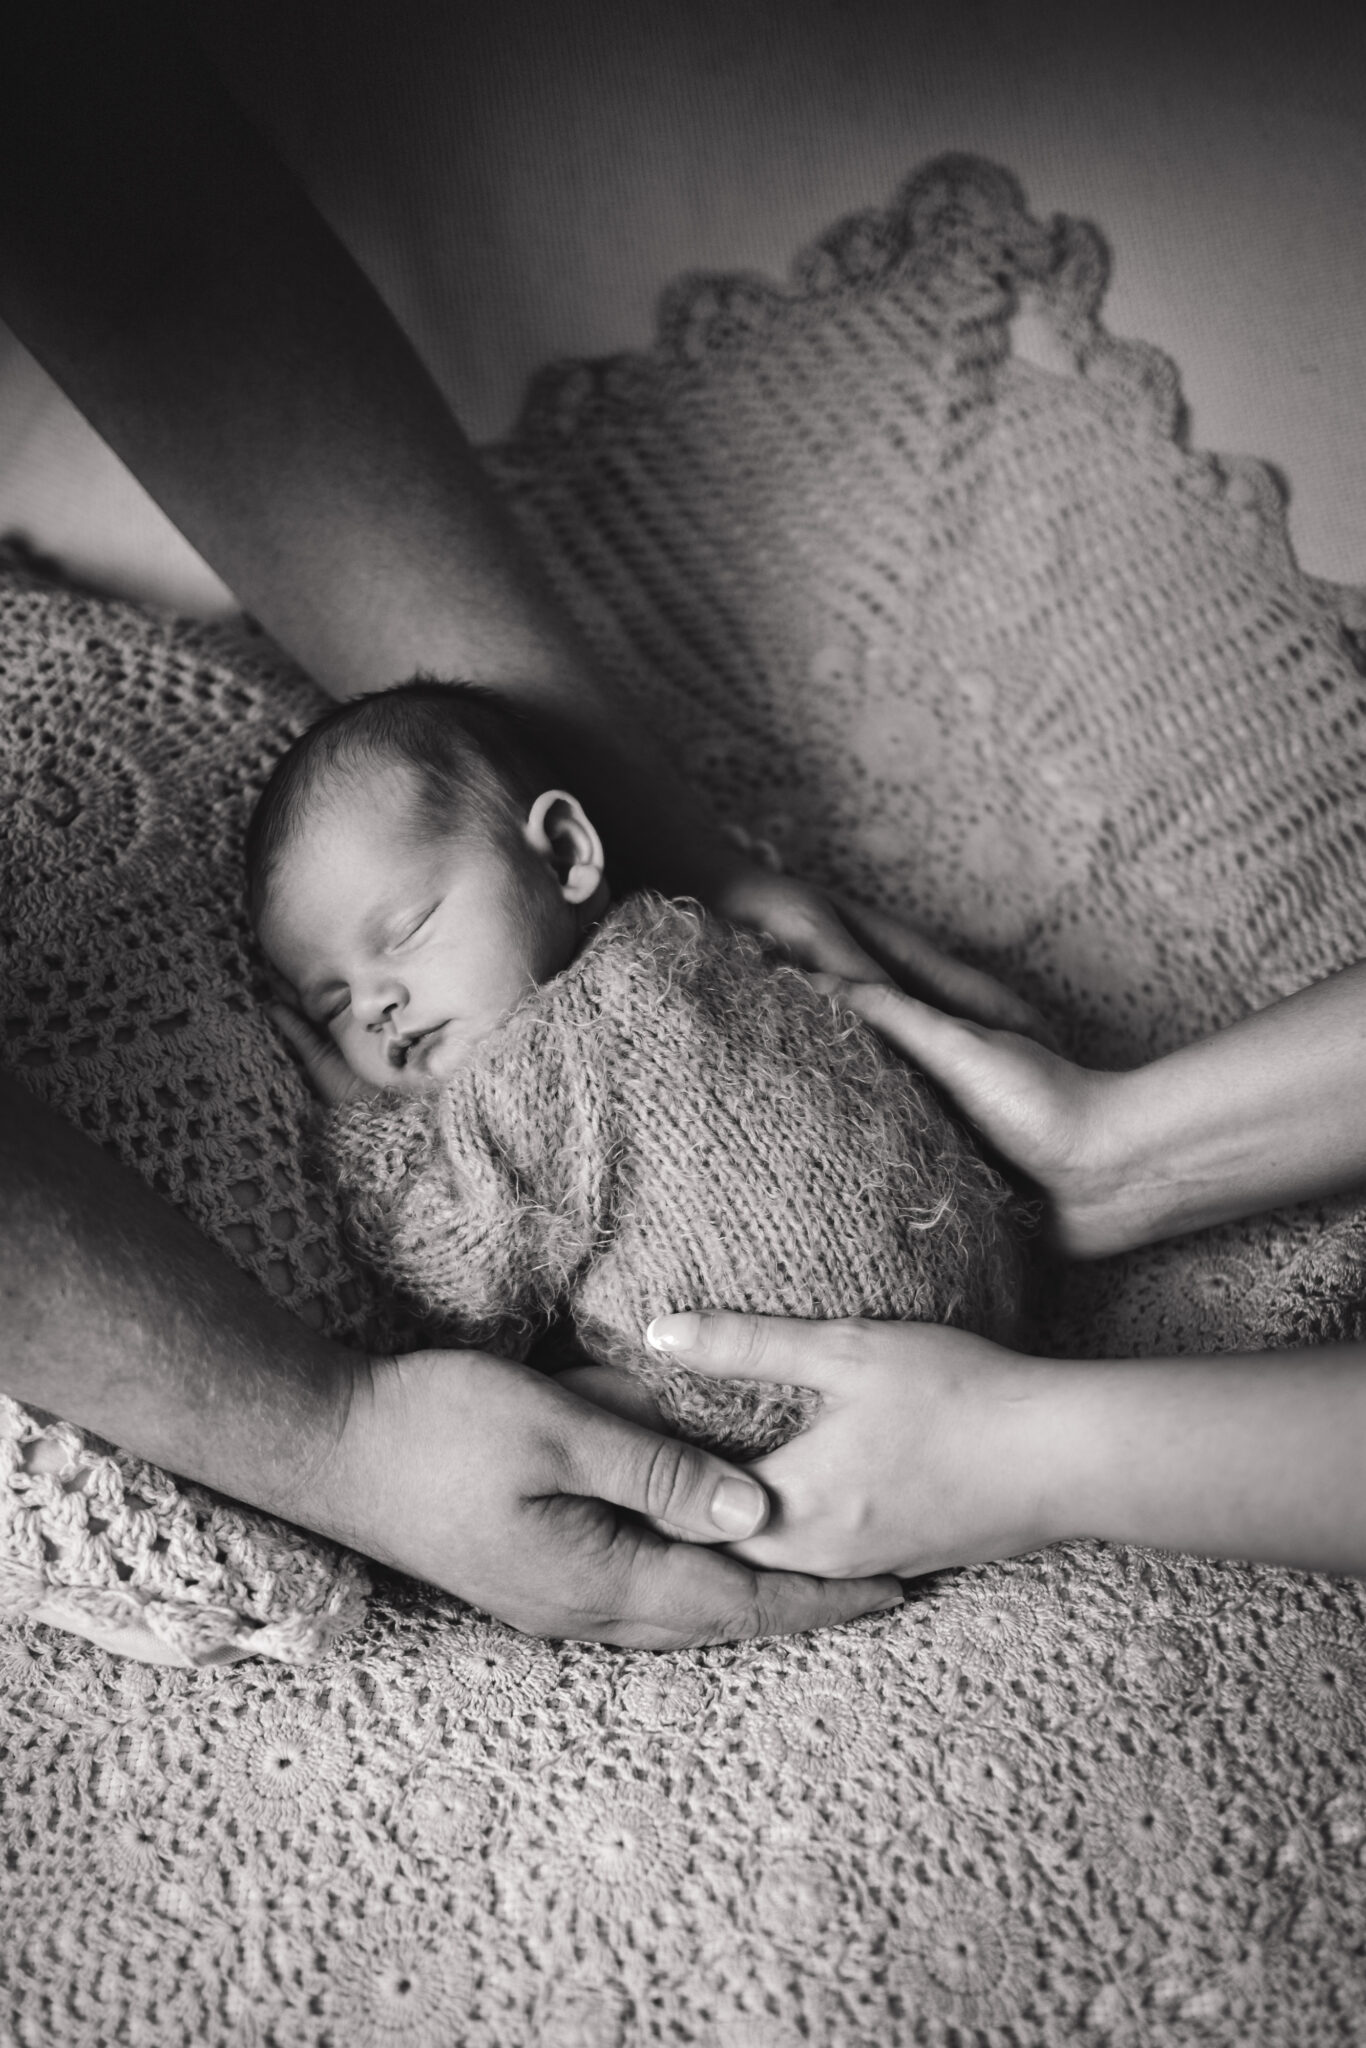 mum and dads hands holding newborn baby black and white image